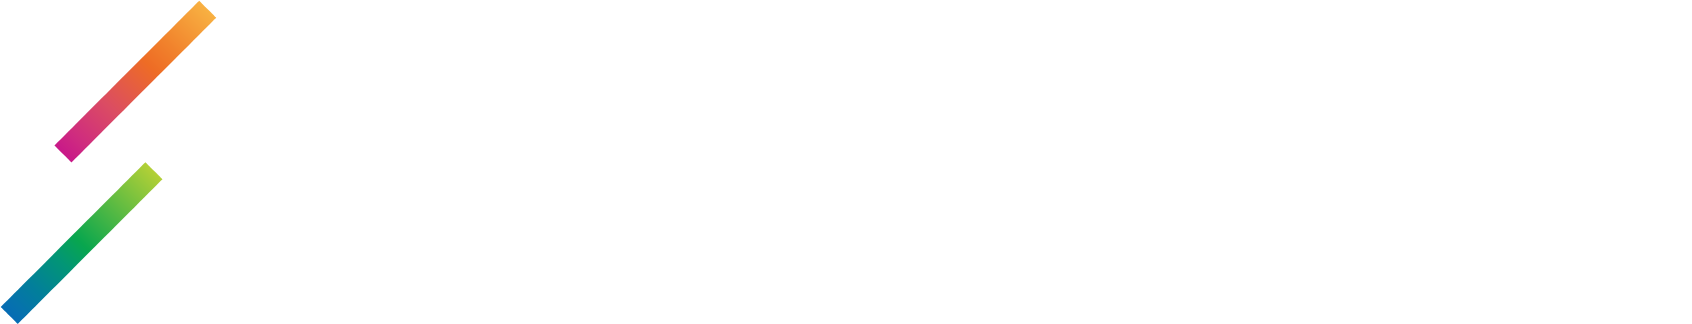 Lumentum logo large for dark backgrounds (transparent PNG)